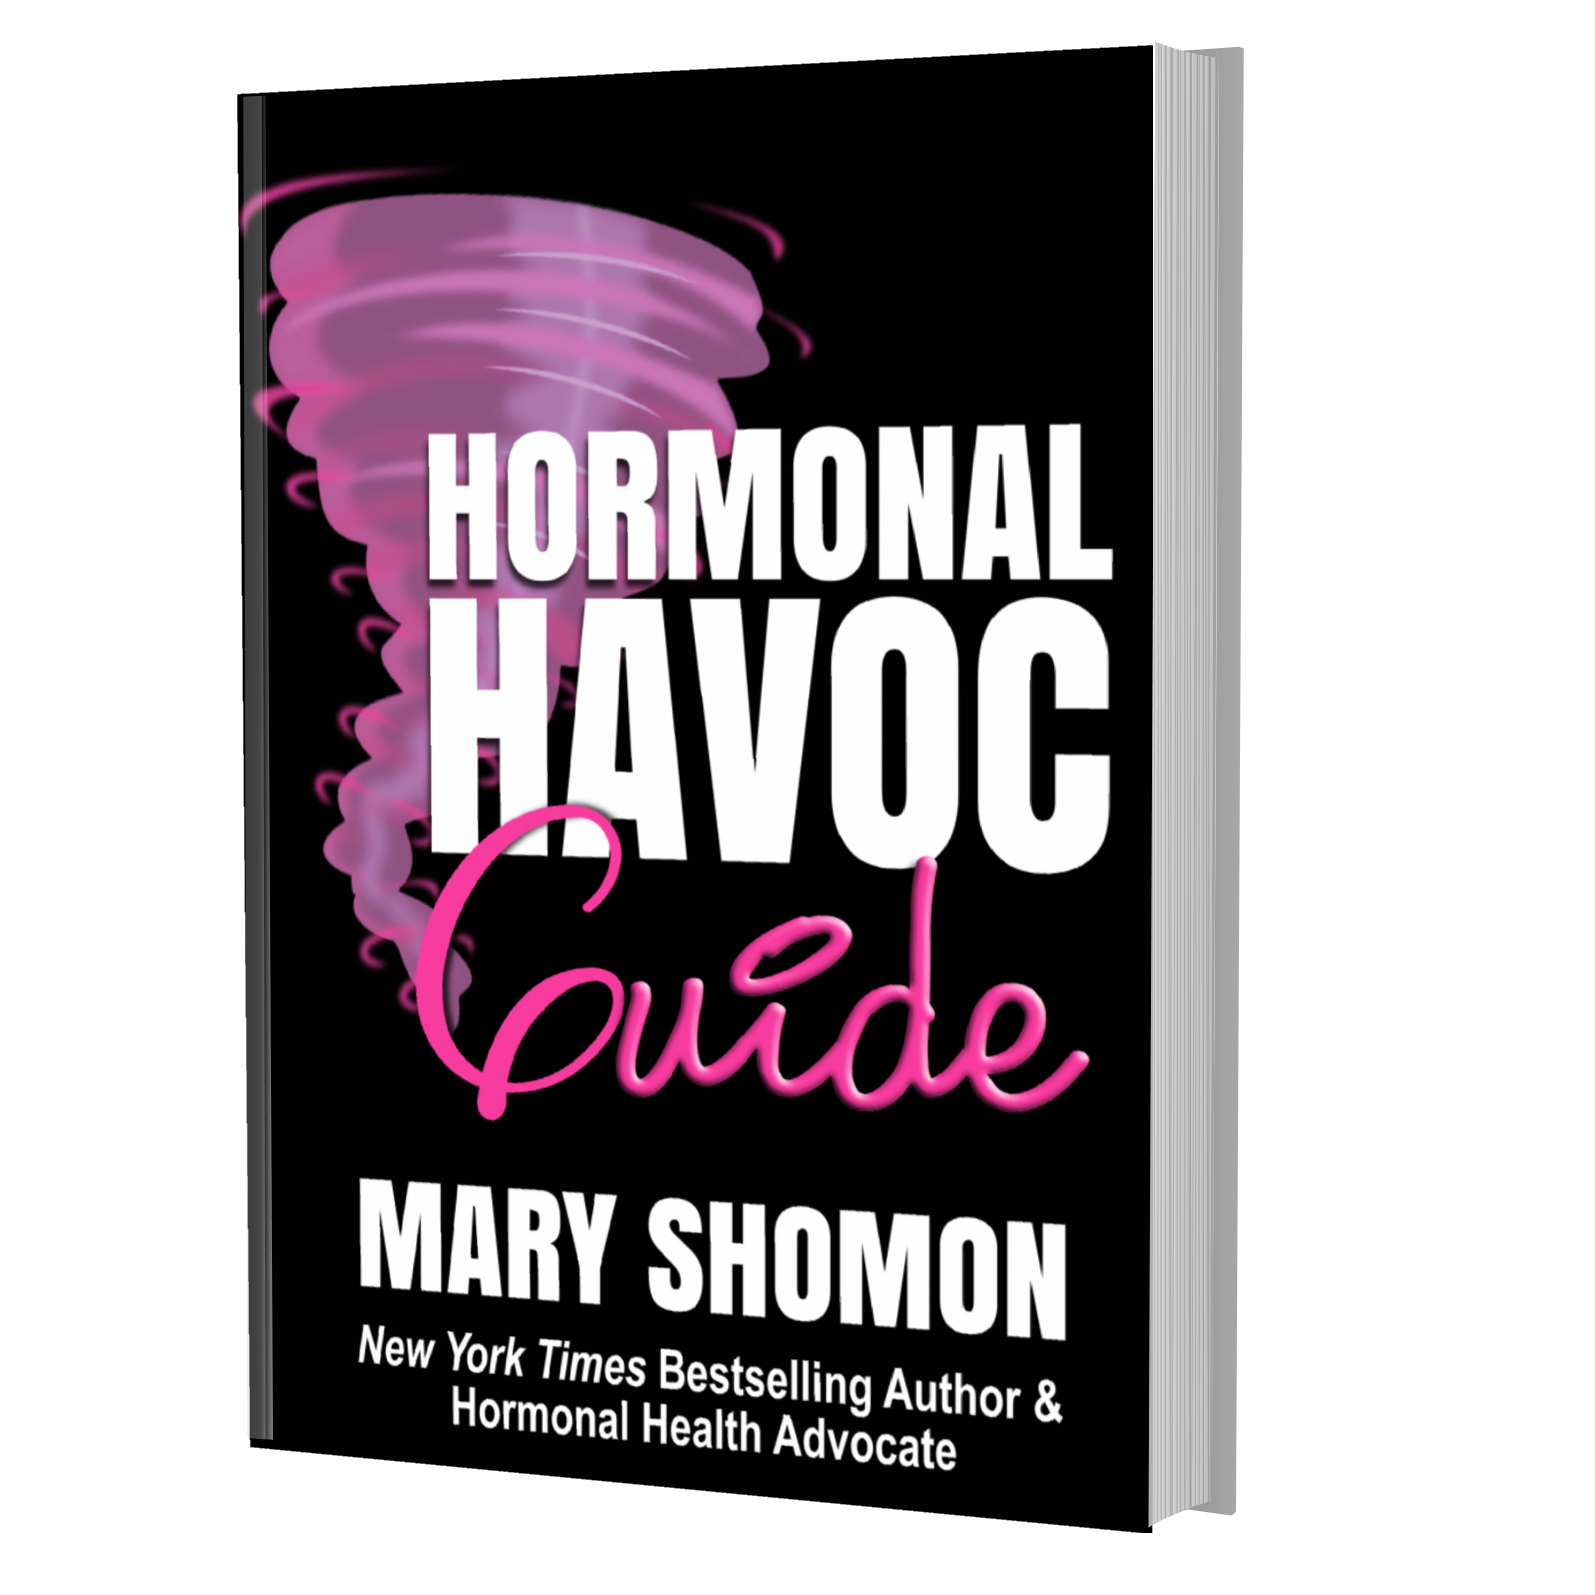 Hormonal Havoc Guide - Gift for Webinar Participants